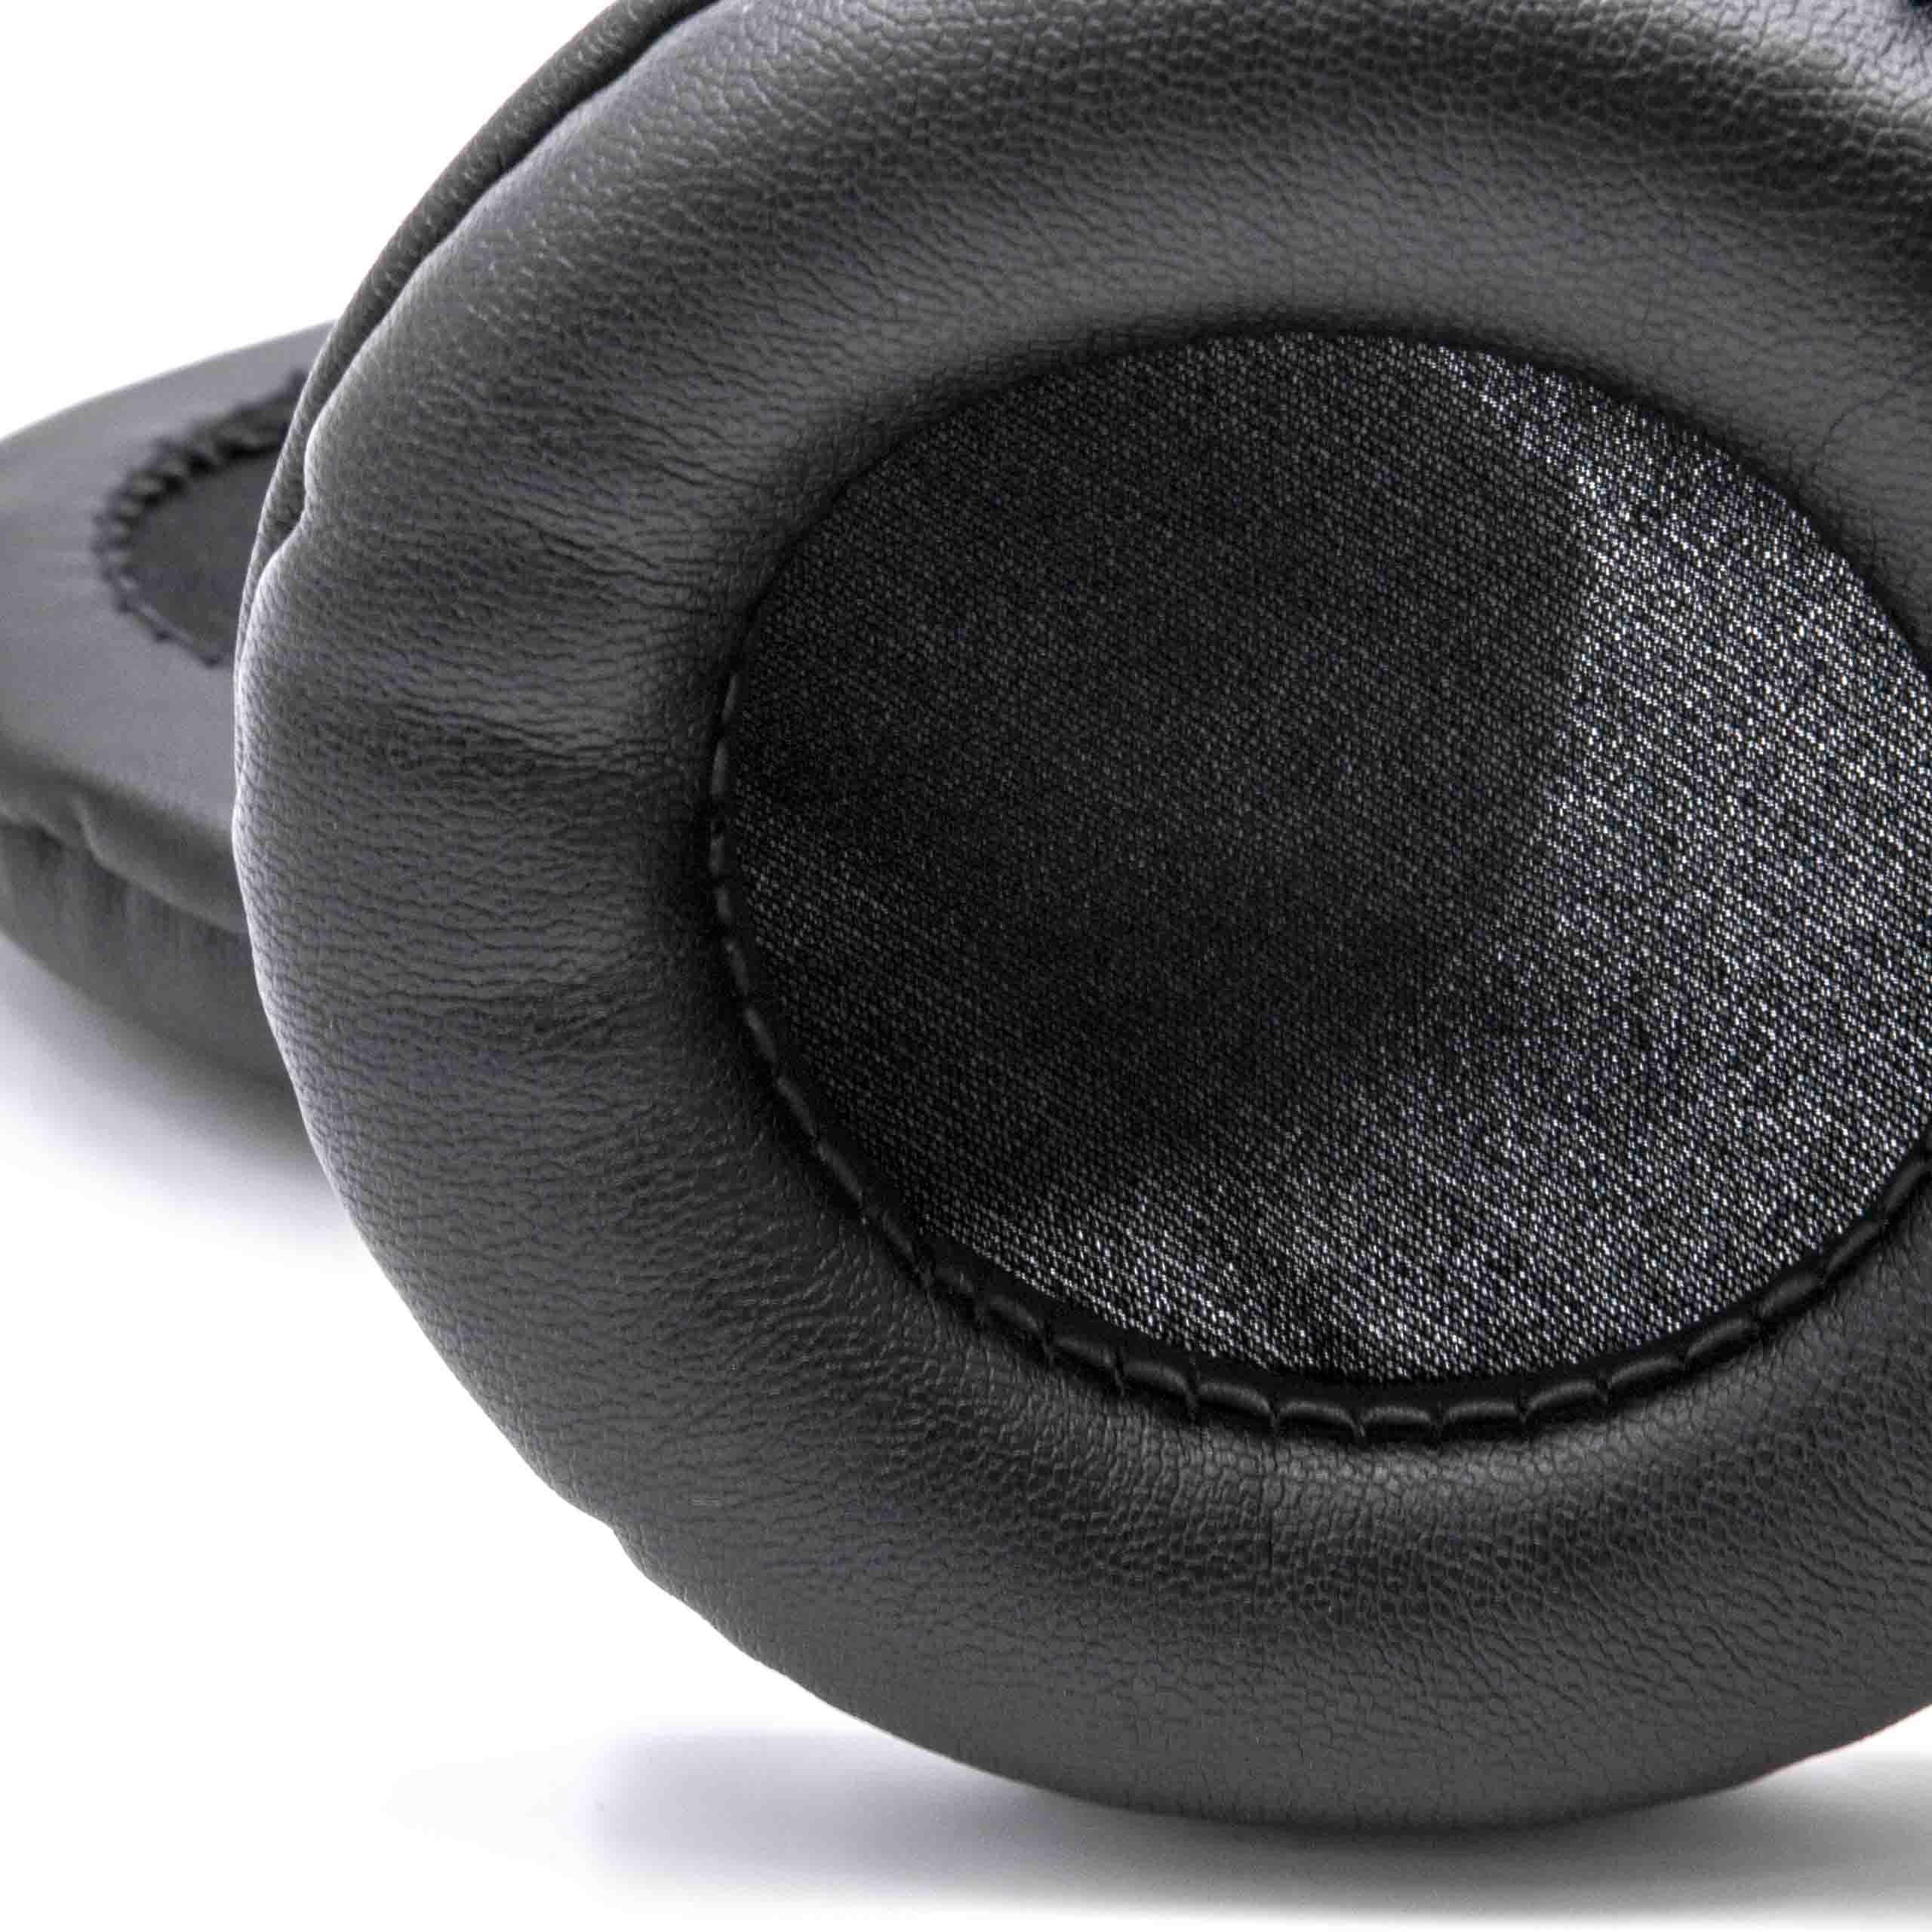 benötigen Ohrpolster passend die Kopfhörer, Ohrpolster Kopfhörer vhbw für 95mm